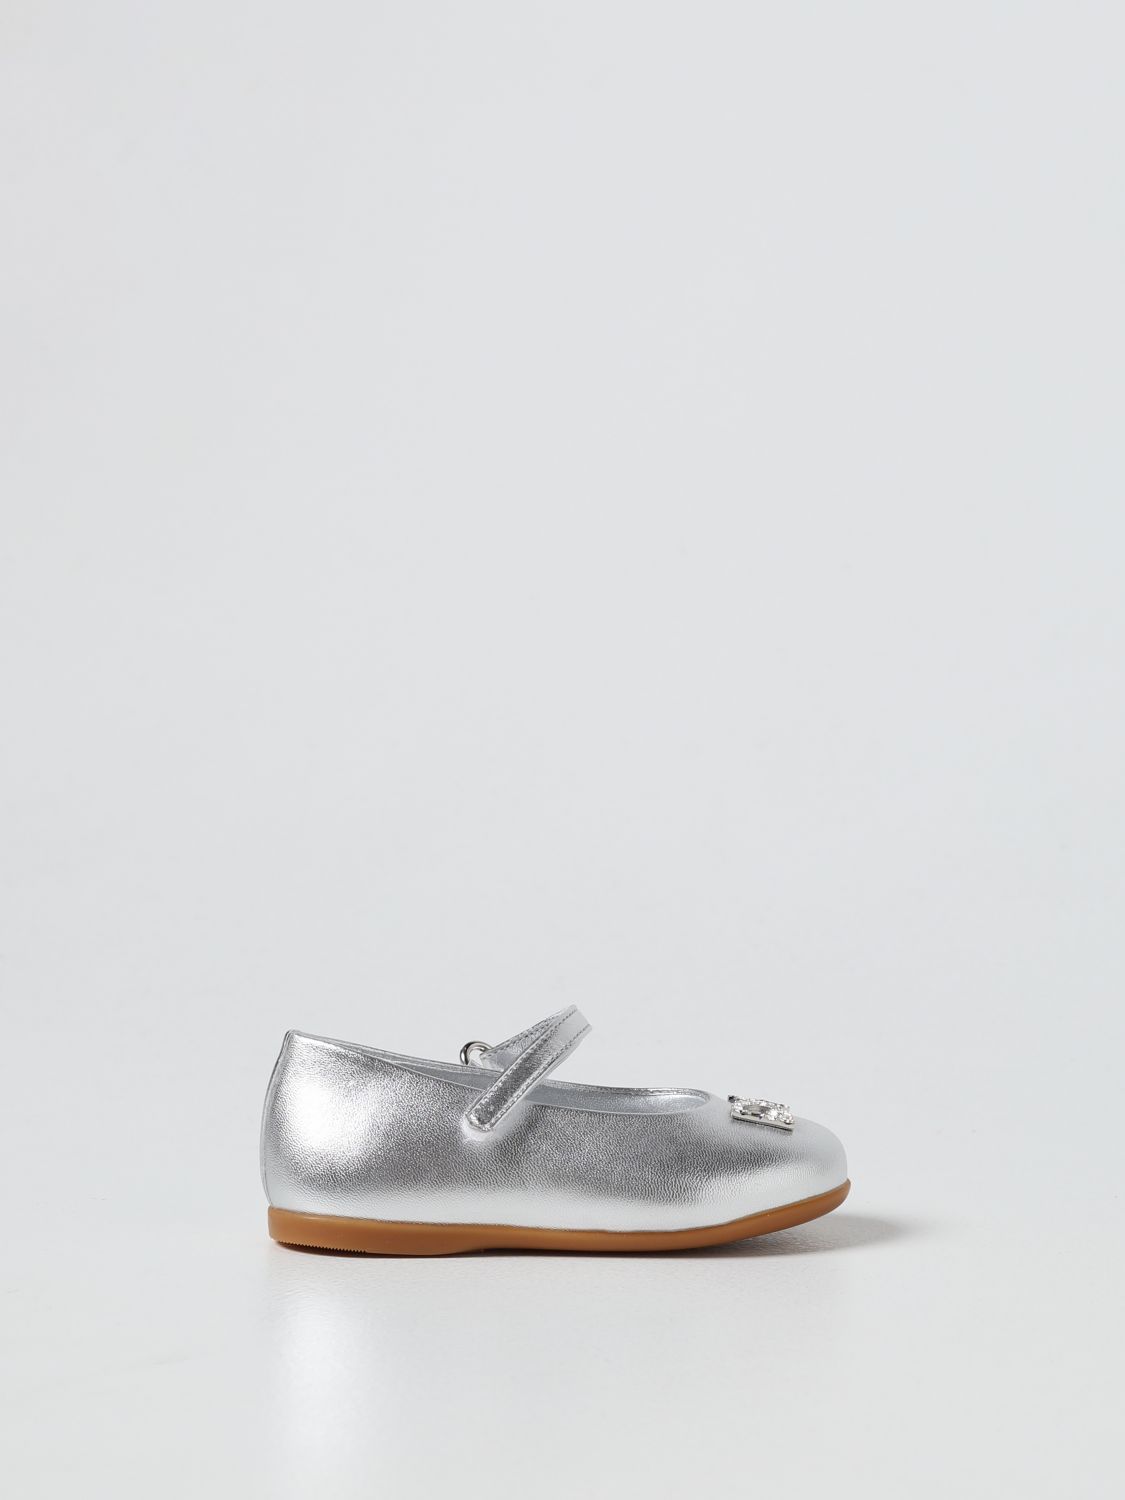 DOLCE & GABBANA: laminated nappa leather ballet flat - Silver | Dolce ...